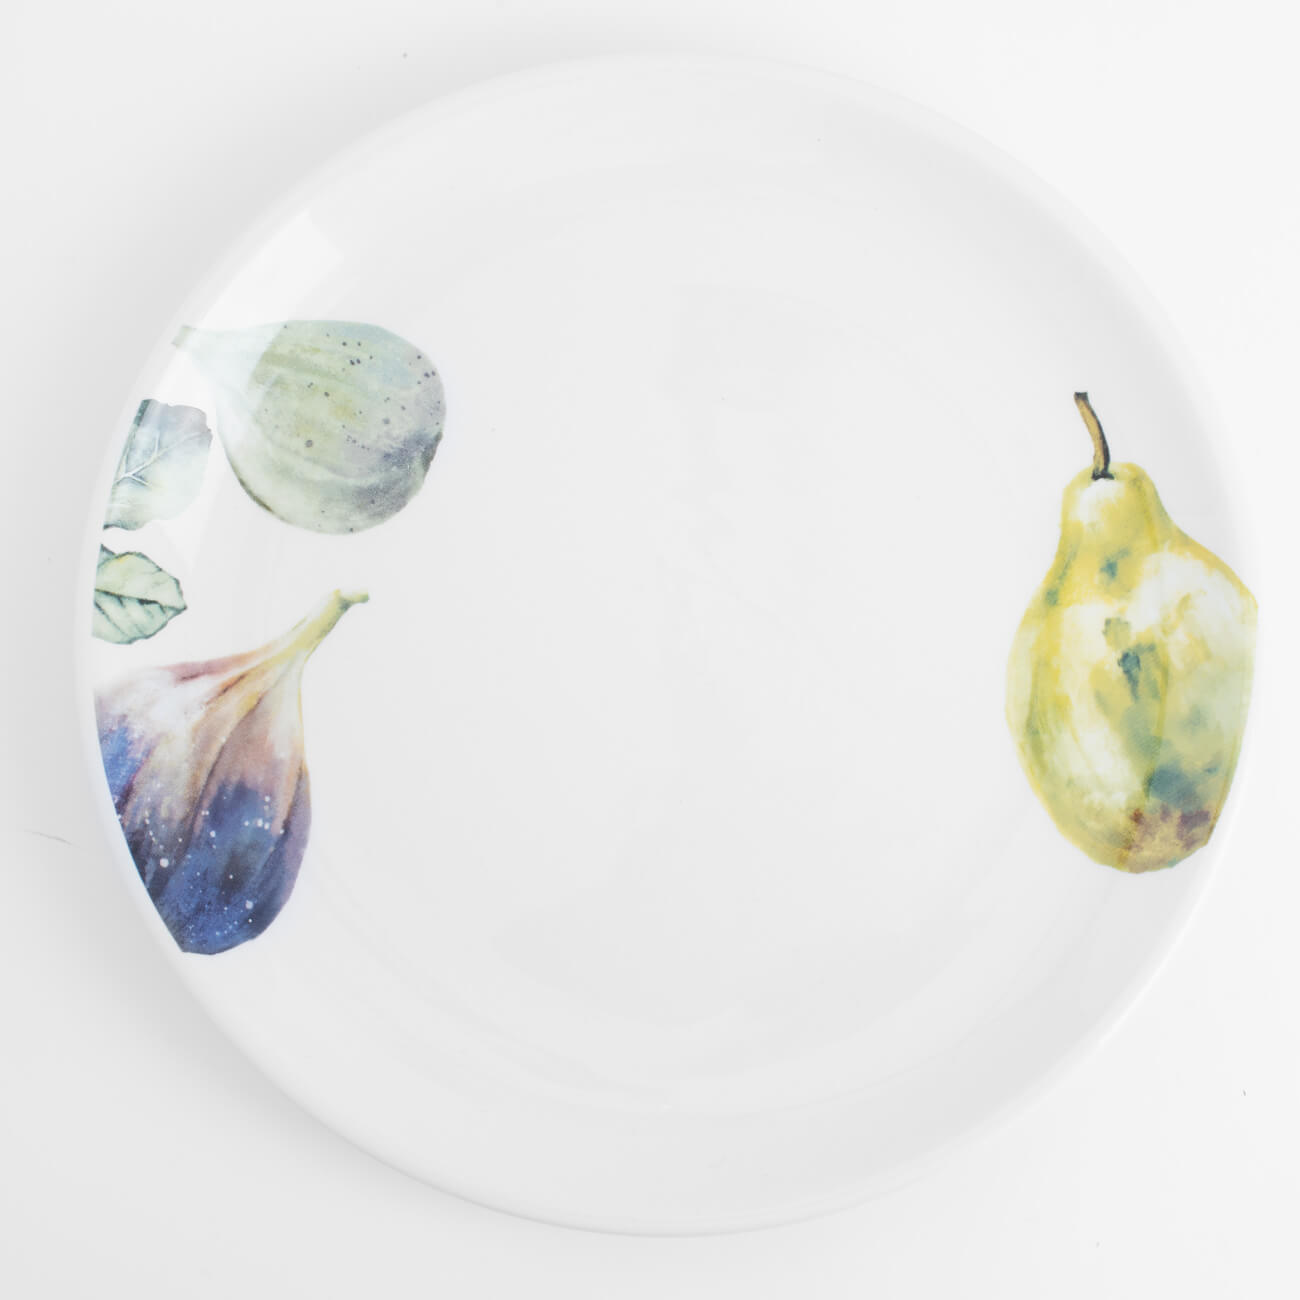 Тарелка закусочная, 21 см, керамика, белая, Инжир и груша, Fruit garden тарелка papstar